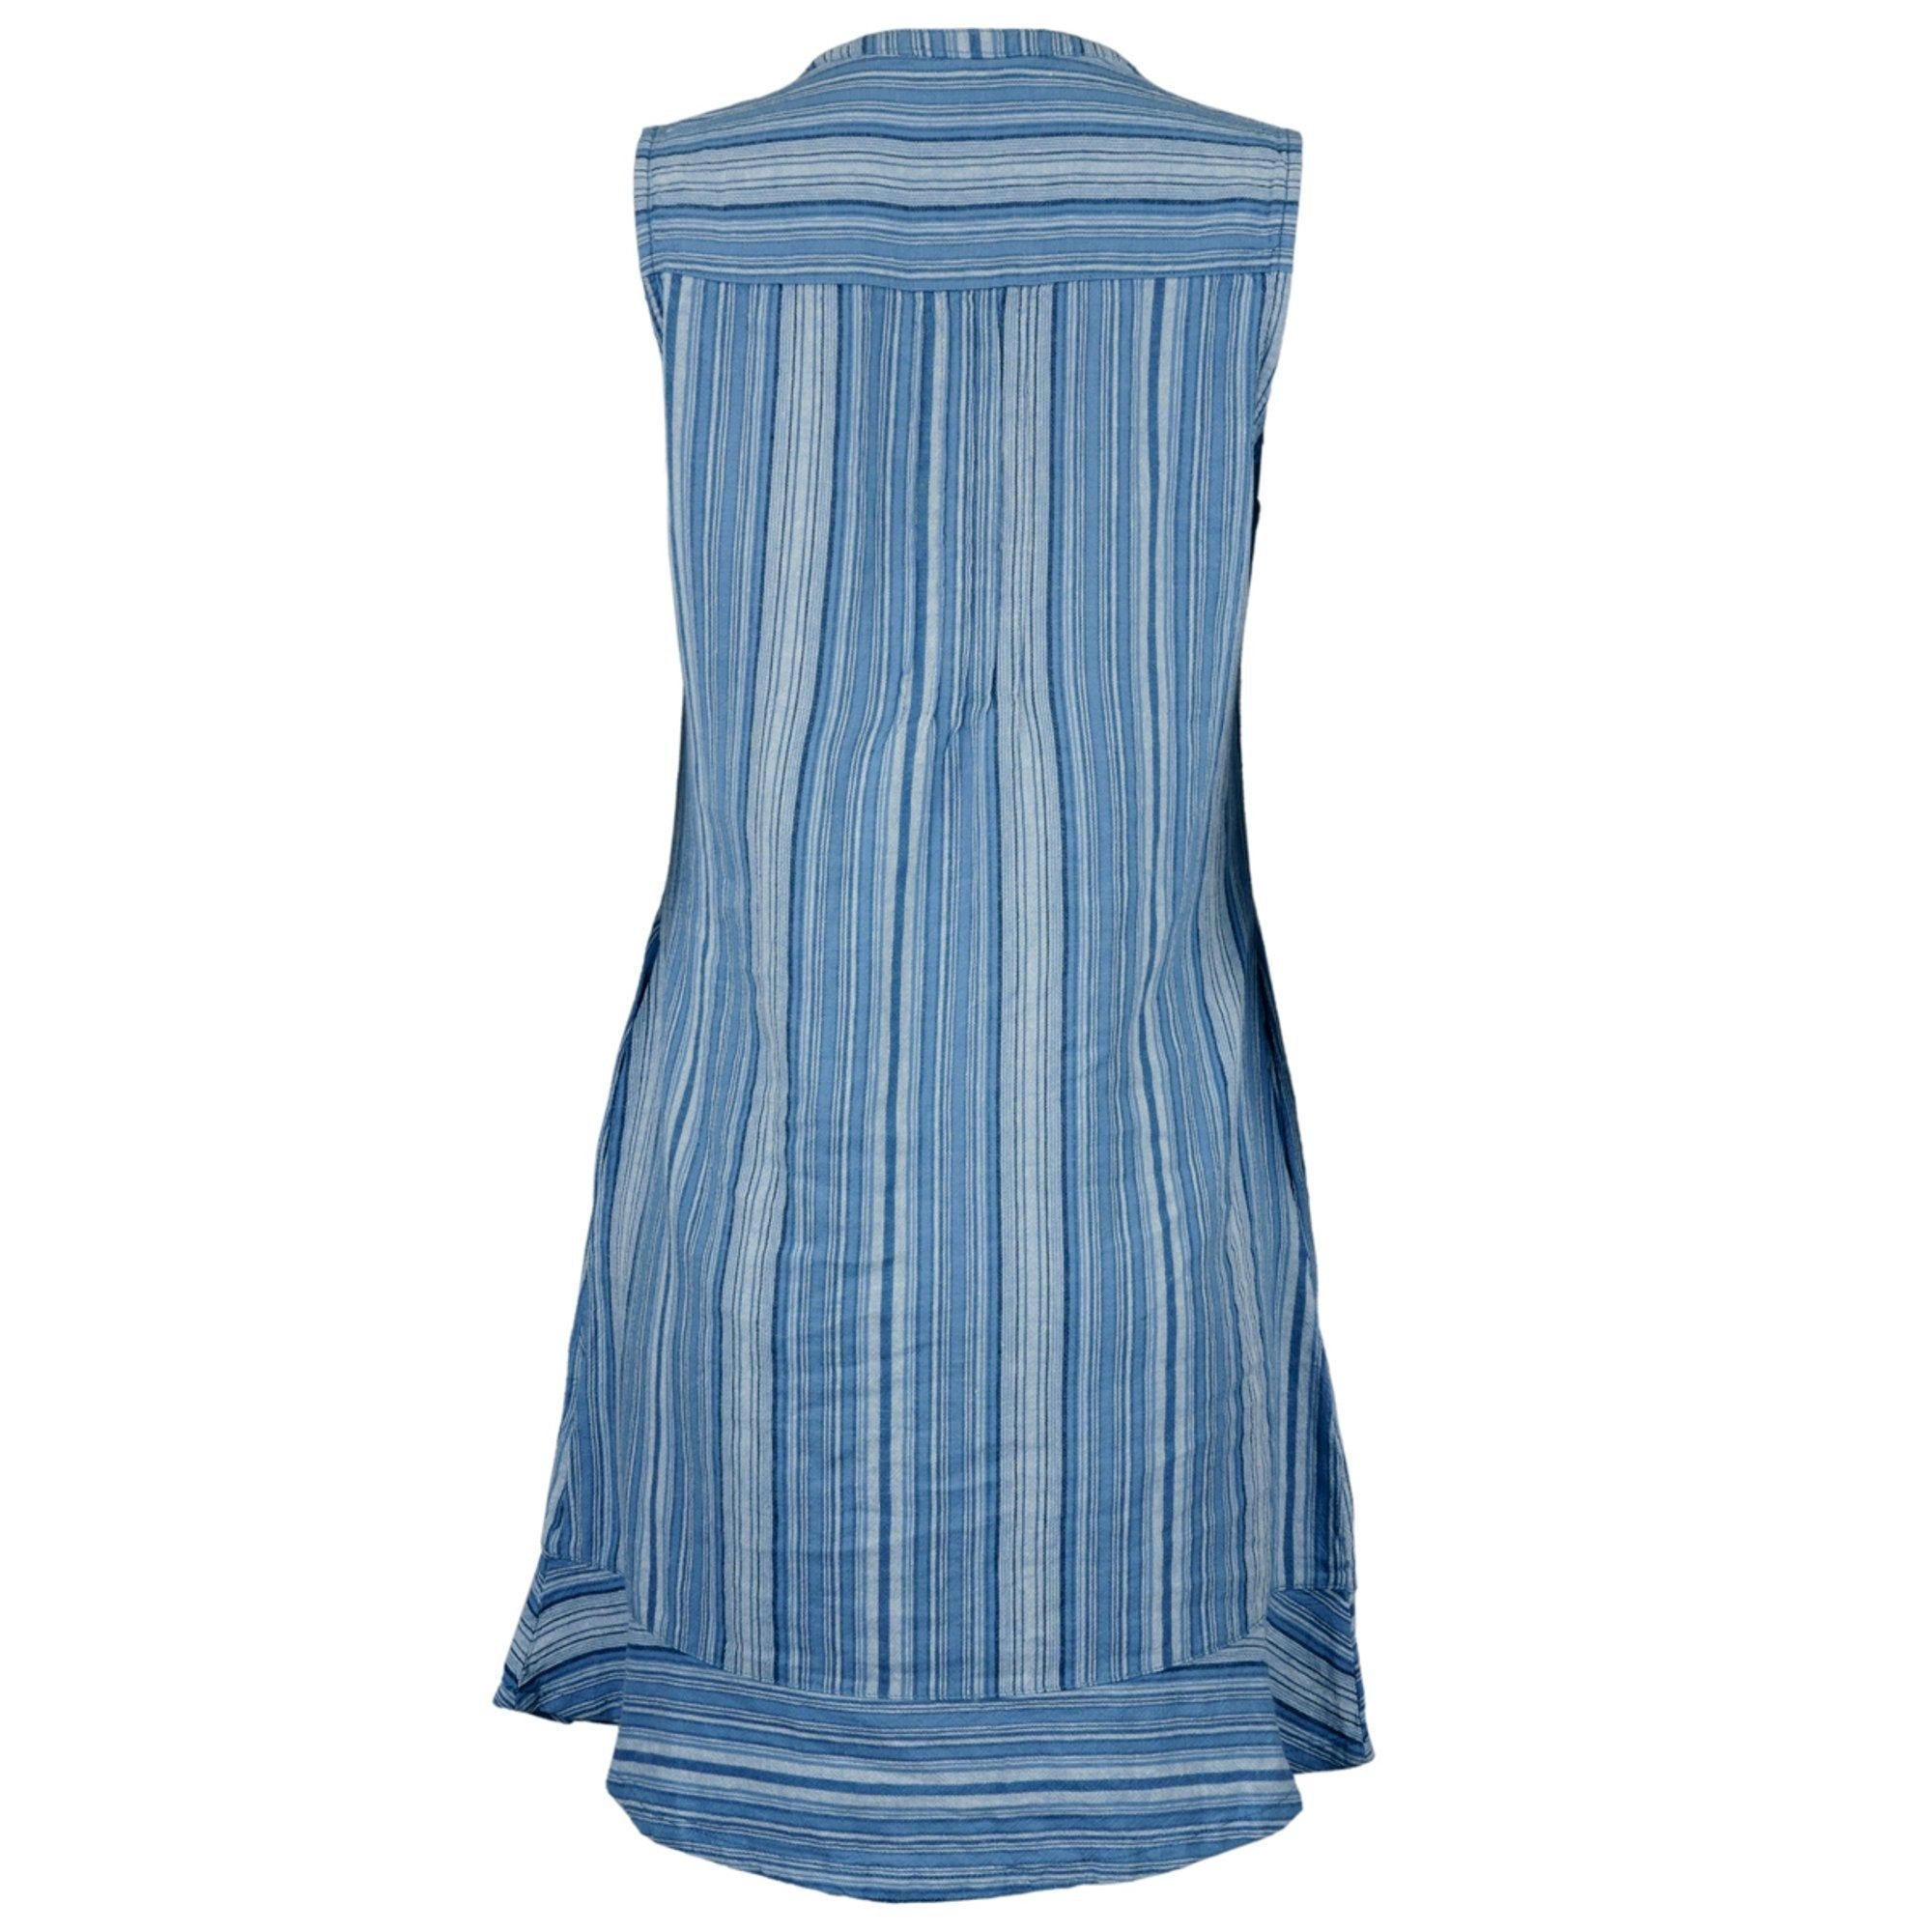 BriggsWomen's Linen Blend Dress - Breathable, Flattering Silhouette, Versatile Summer Fashion